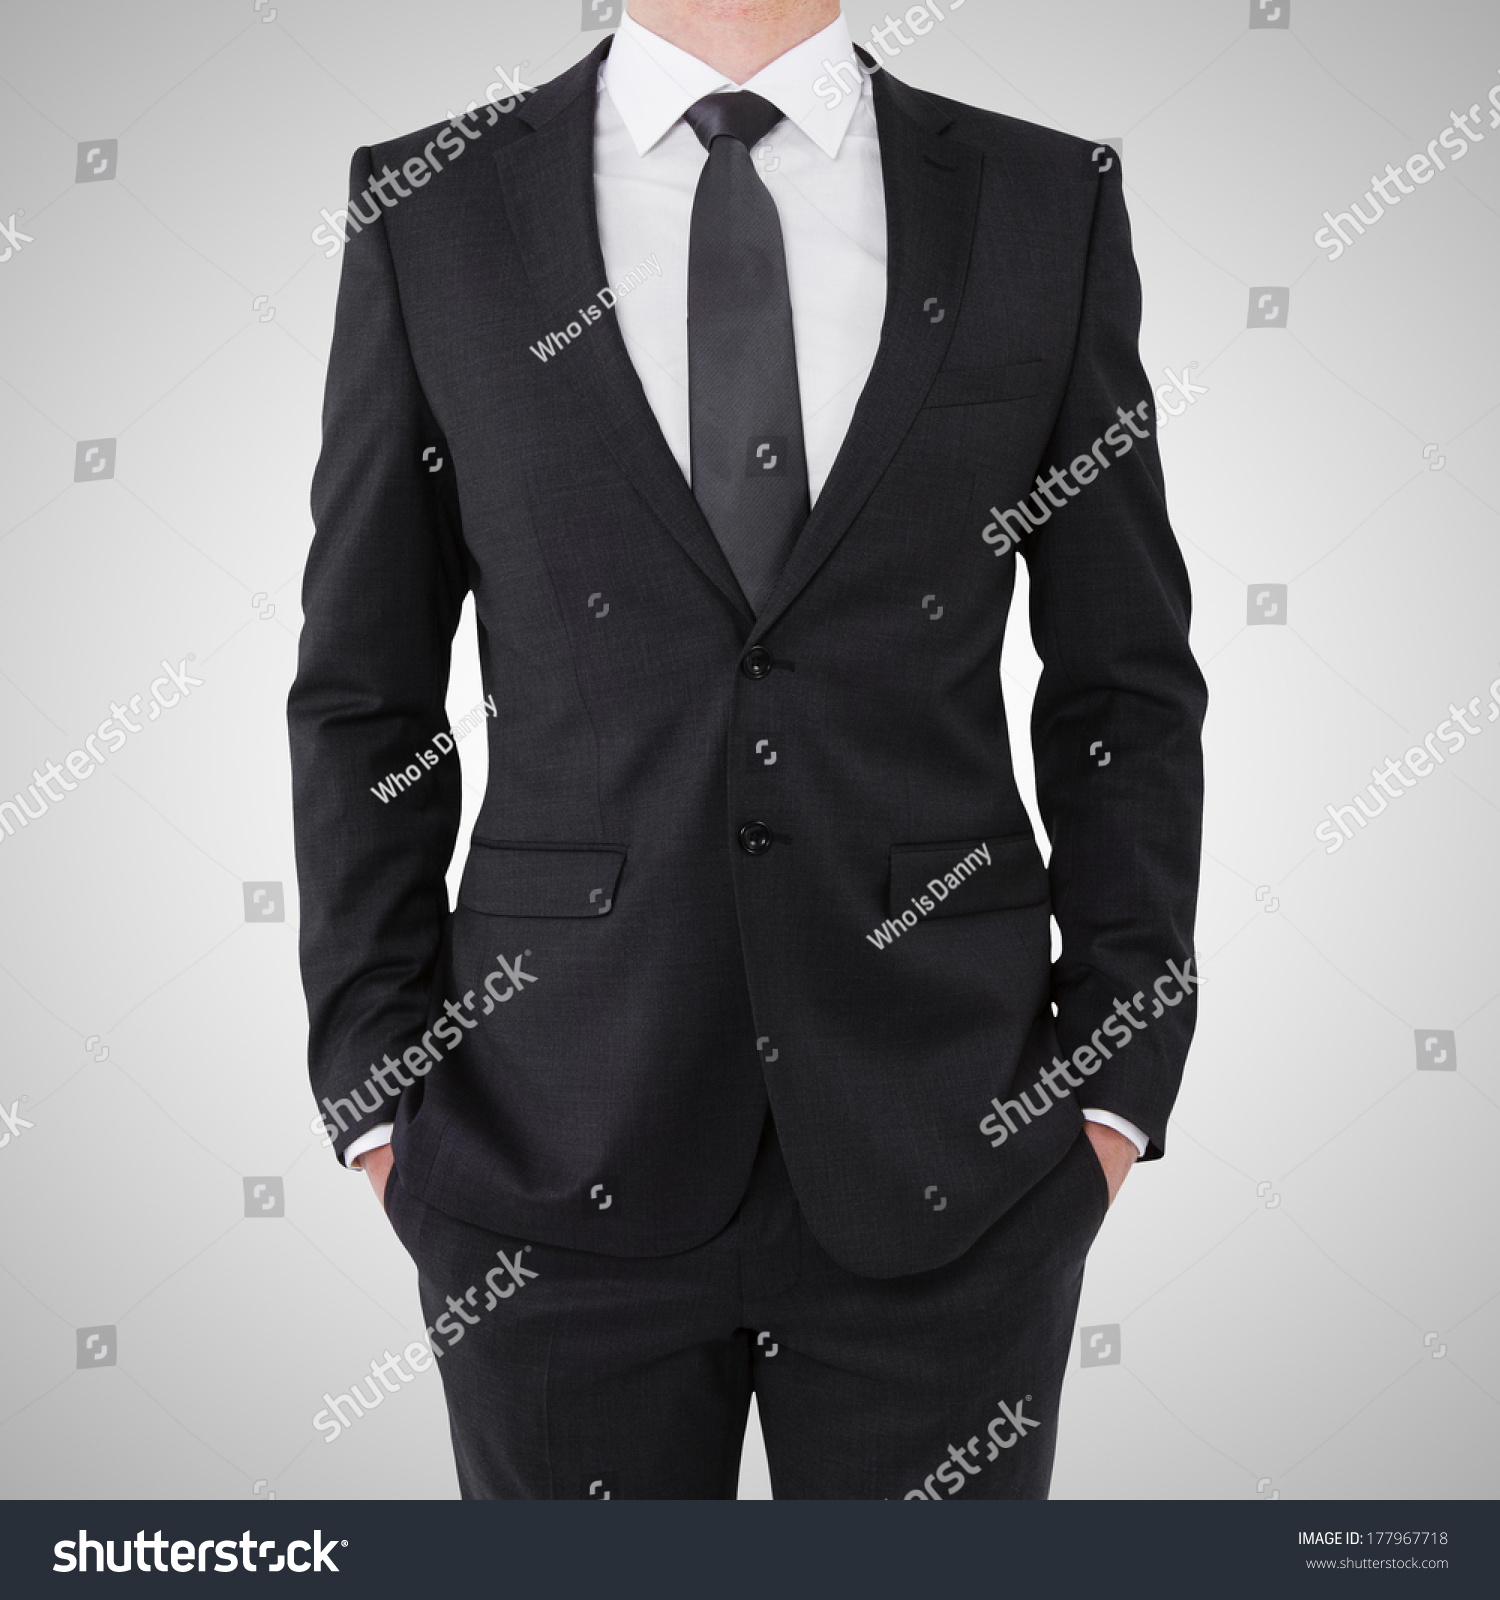 Businessman Suit Holds Hands Pockets Stock Photo 177967718 - Shutterstock